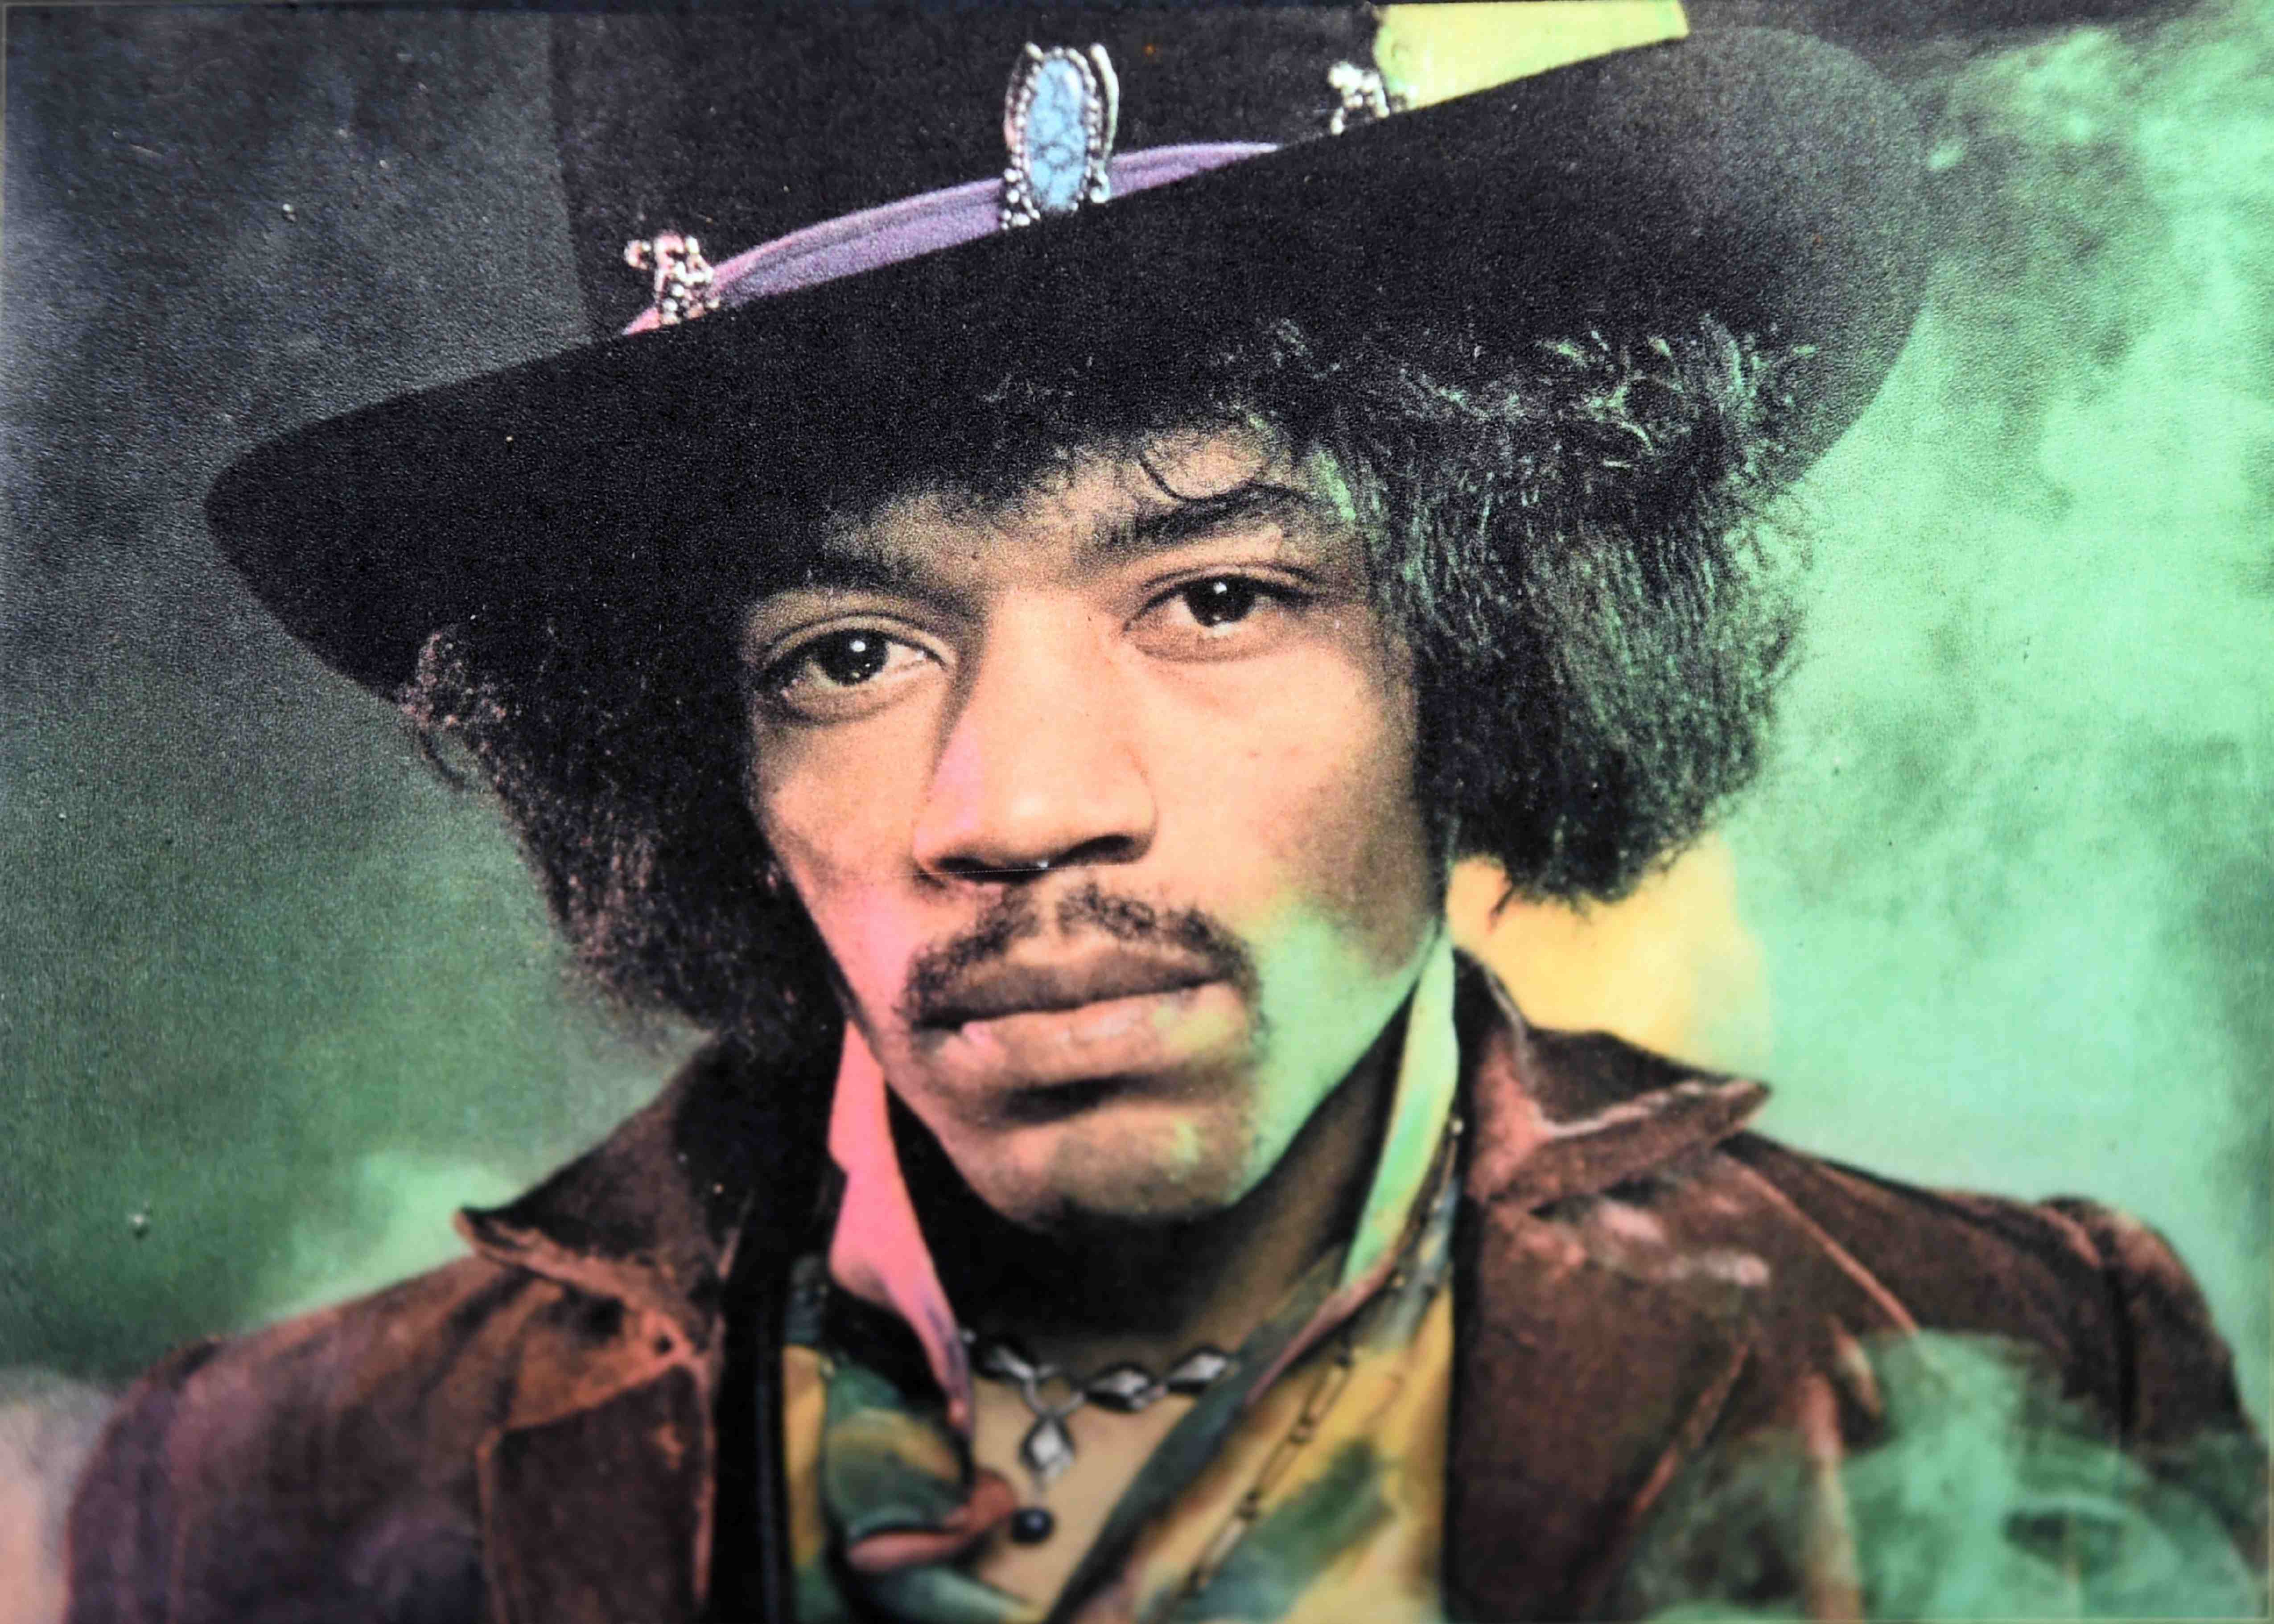 Jimi Hendrix close-up in a hat.